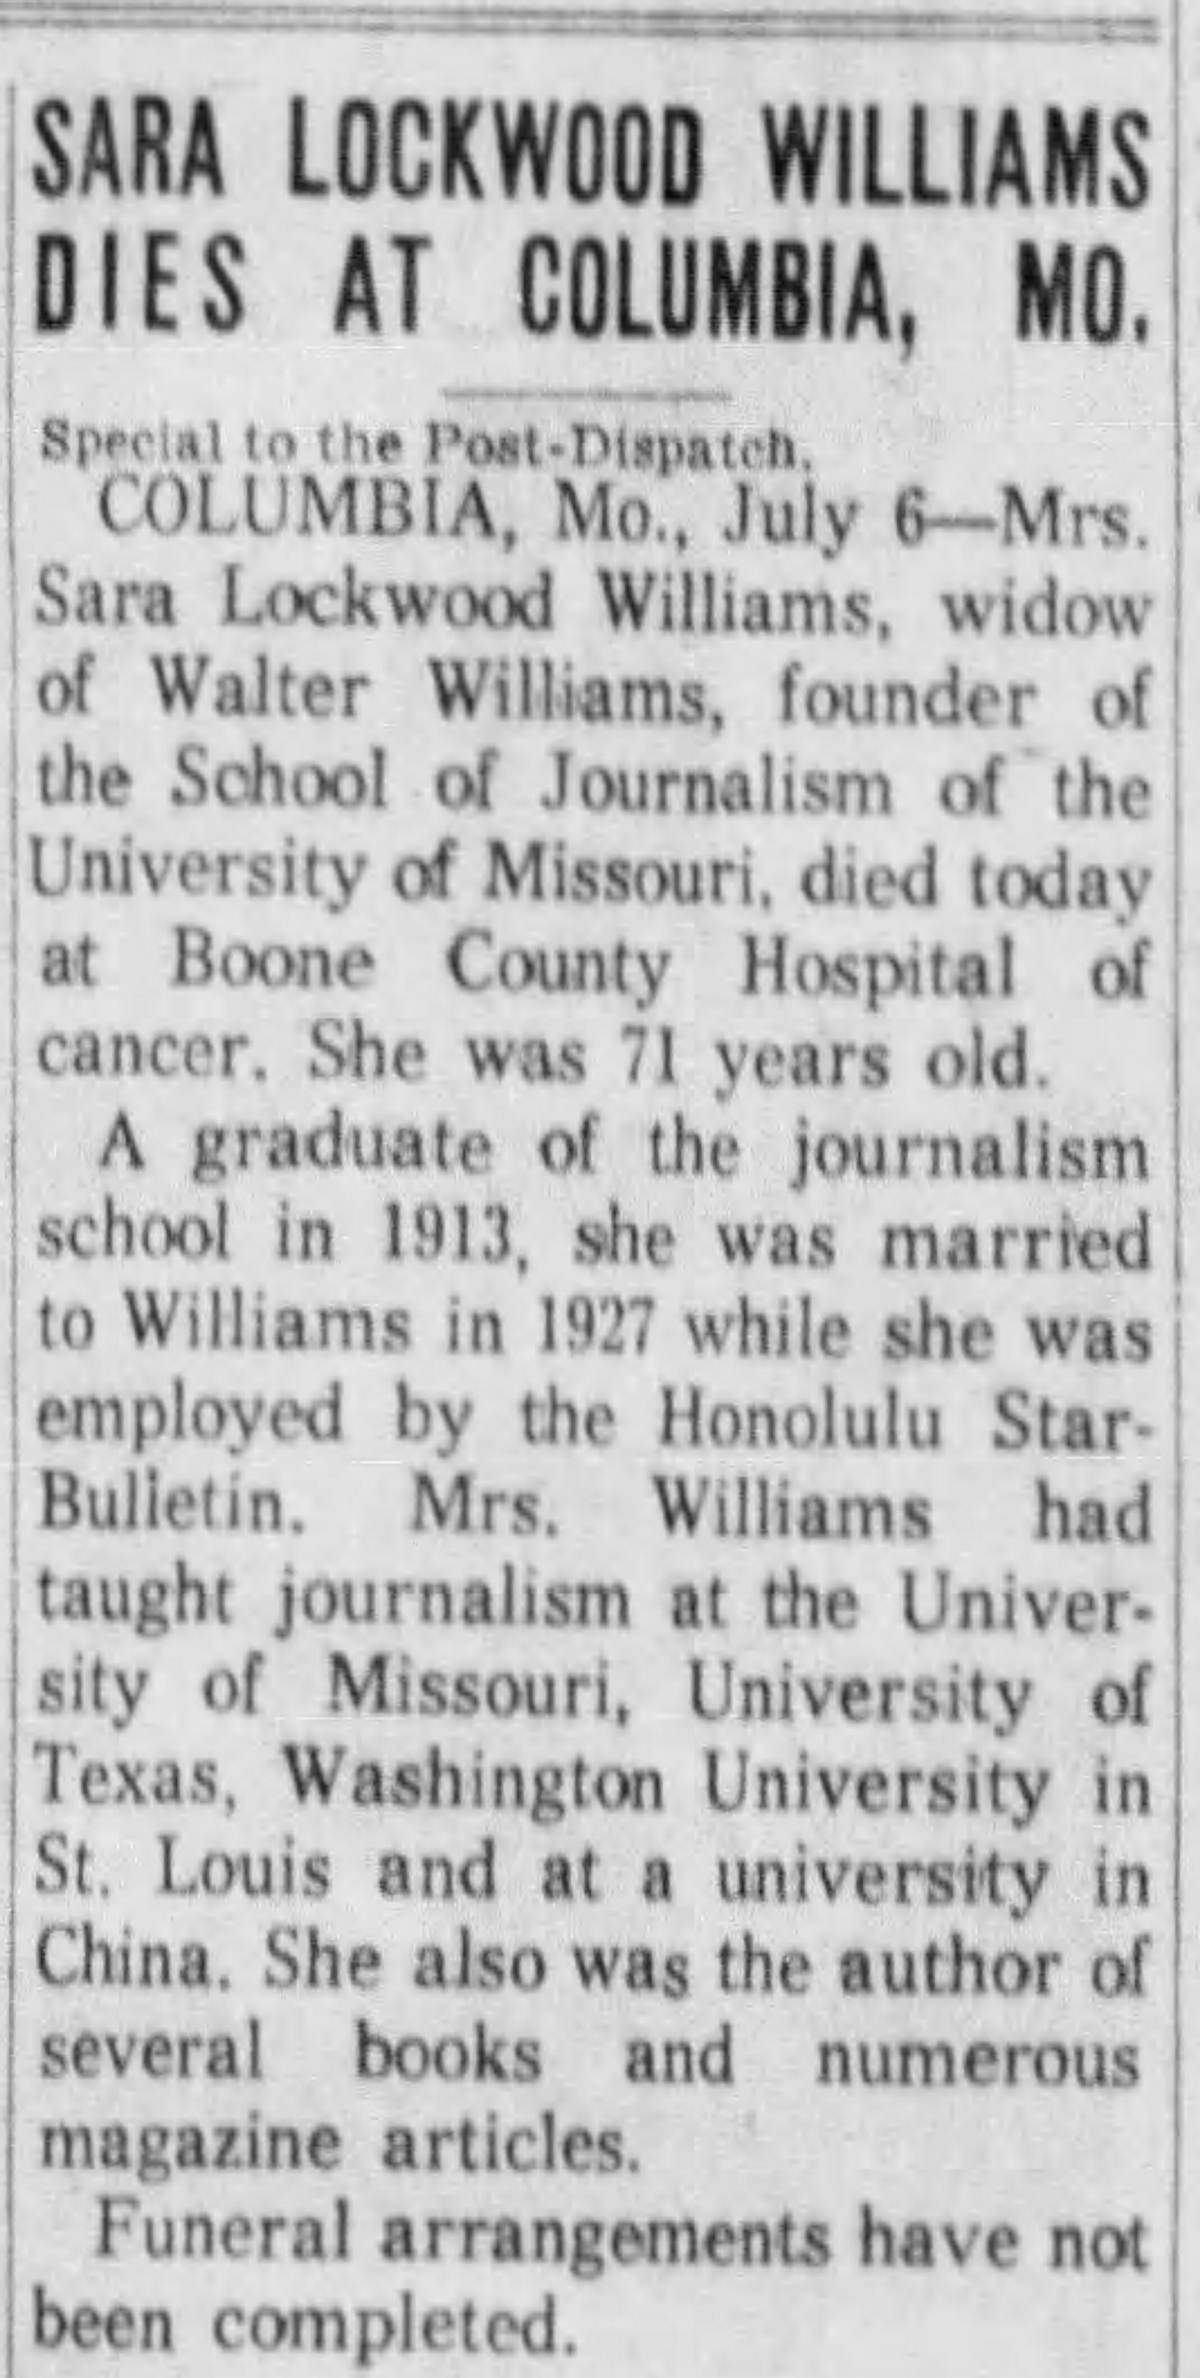 Sara Lockwood Williams died in Columbia, Missouri, on July 6, 1961